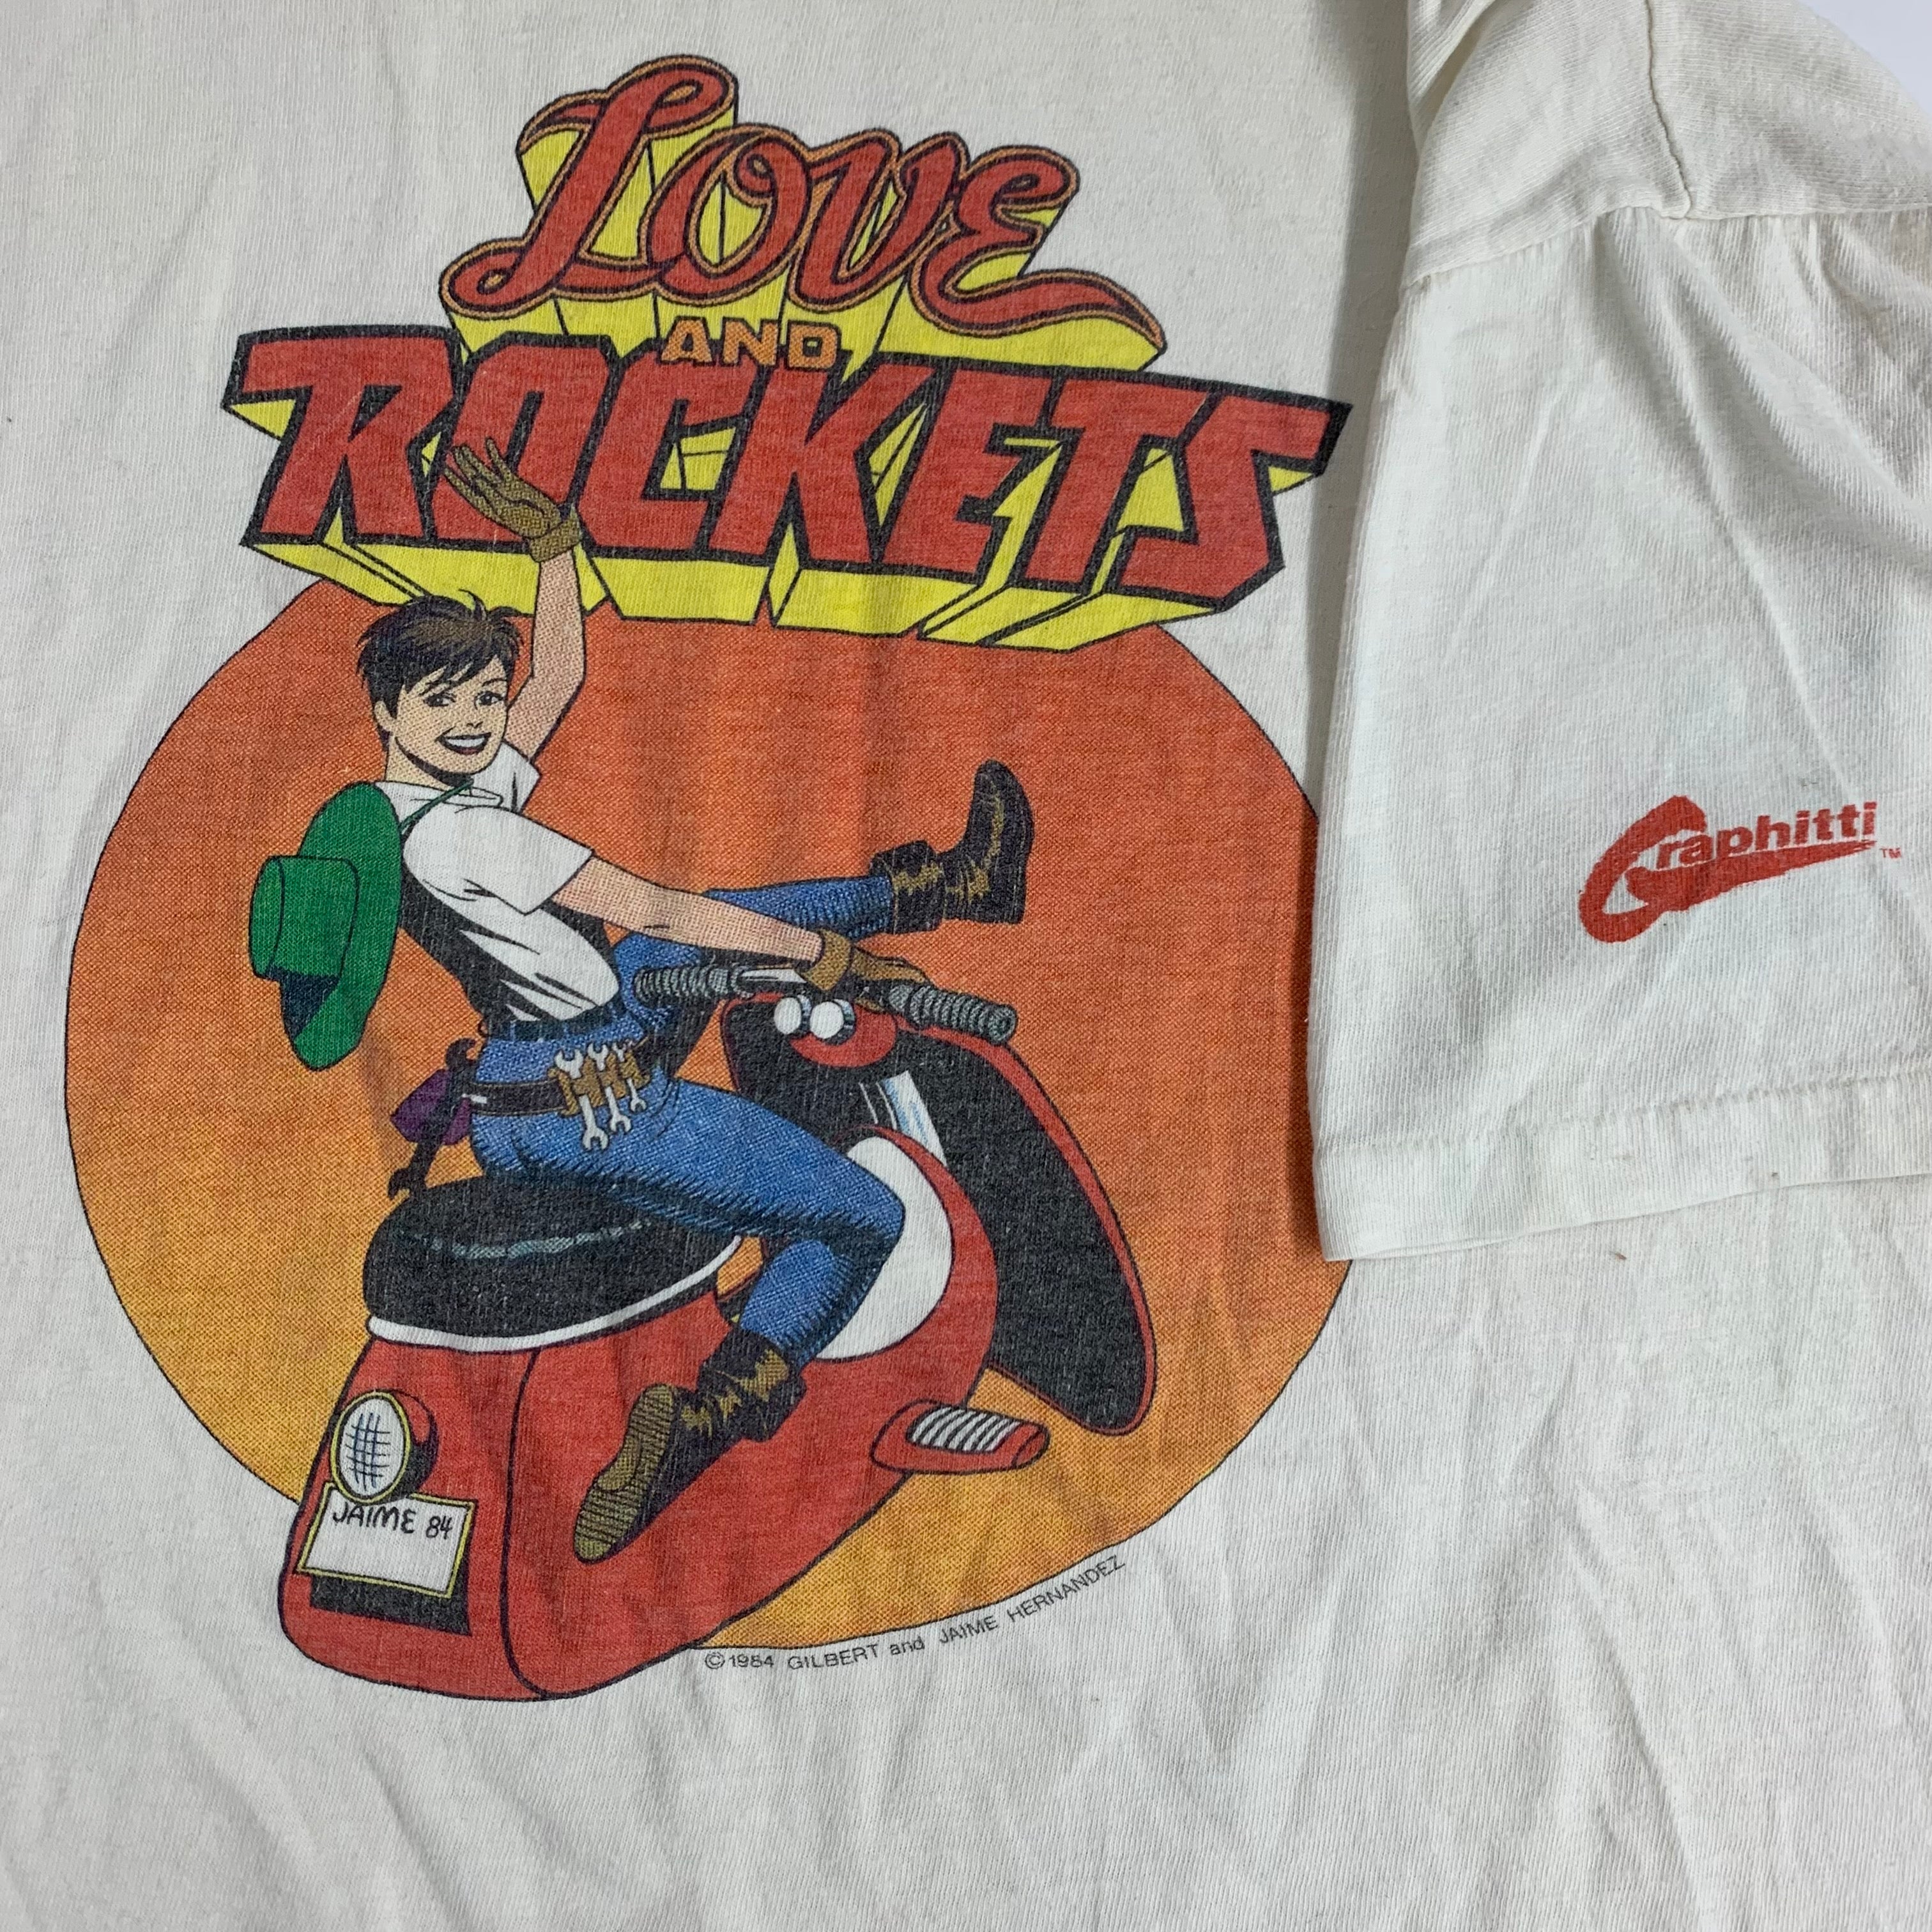 Vintage Houston Rockets Sweatshirt Hoodie Shirt - Jolly Family Gifts